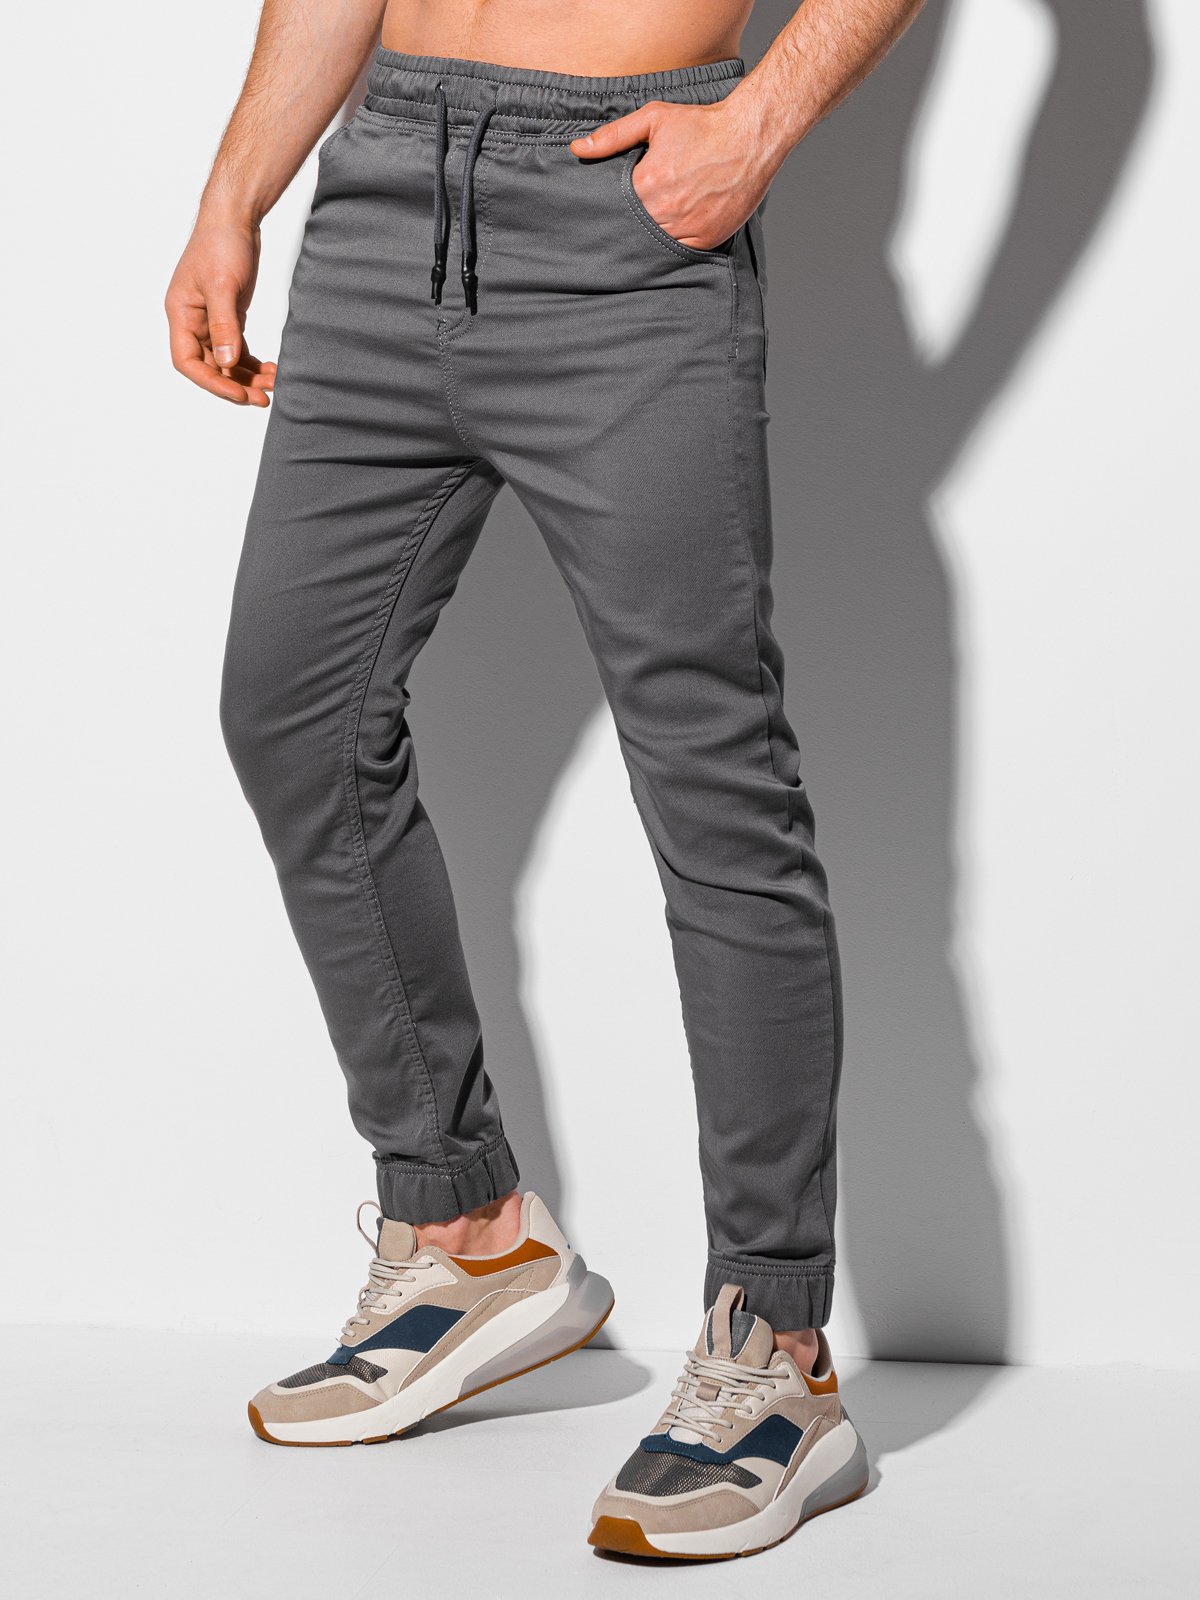 Men's pants joggers P1037 - dark grey | MODONE wholesale - Clothing For Men